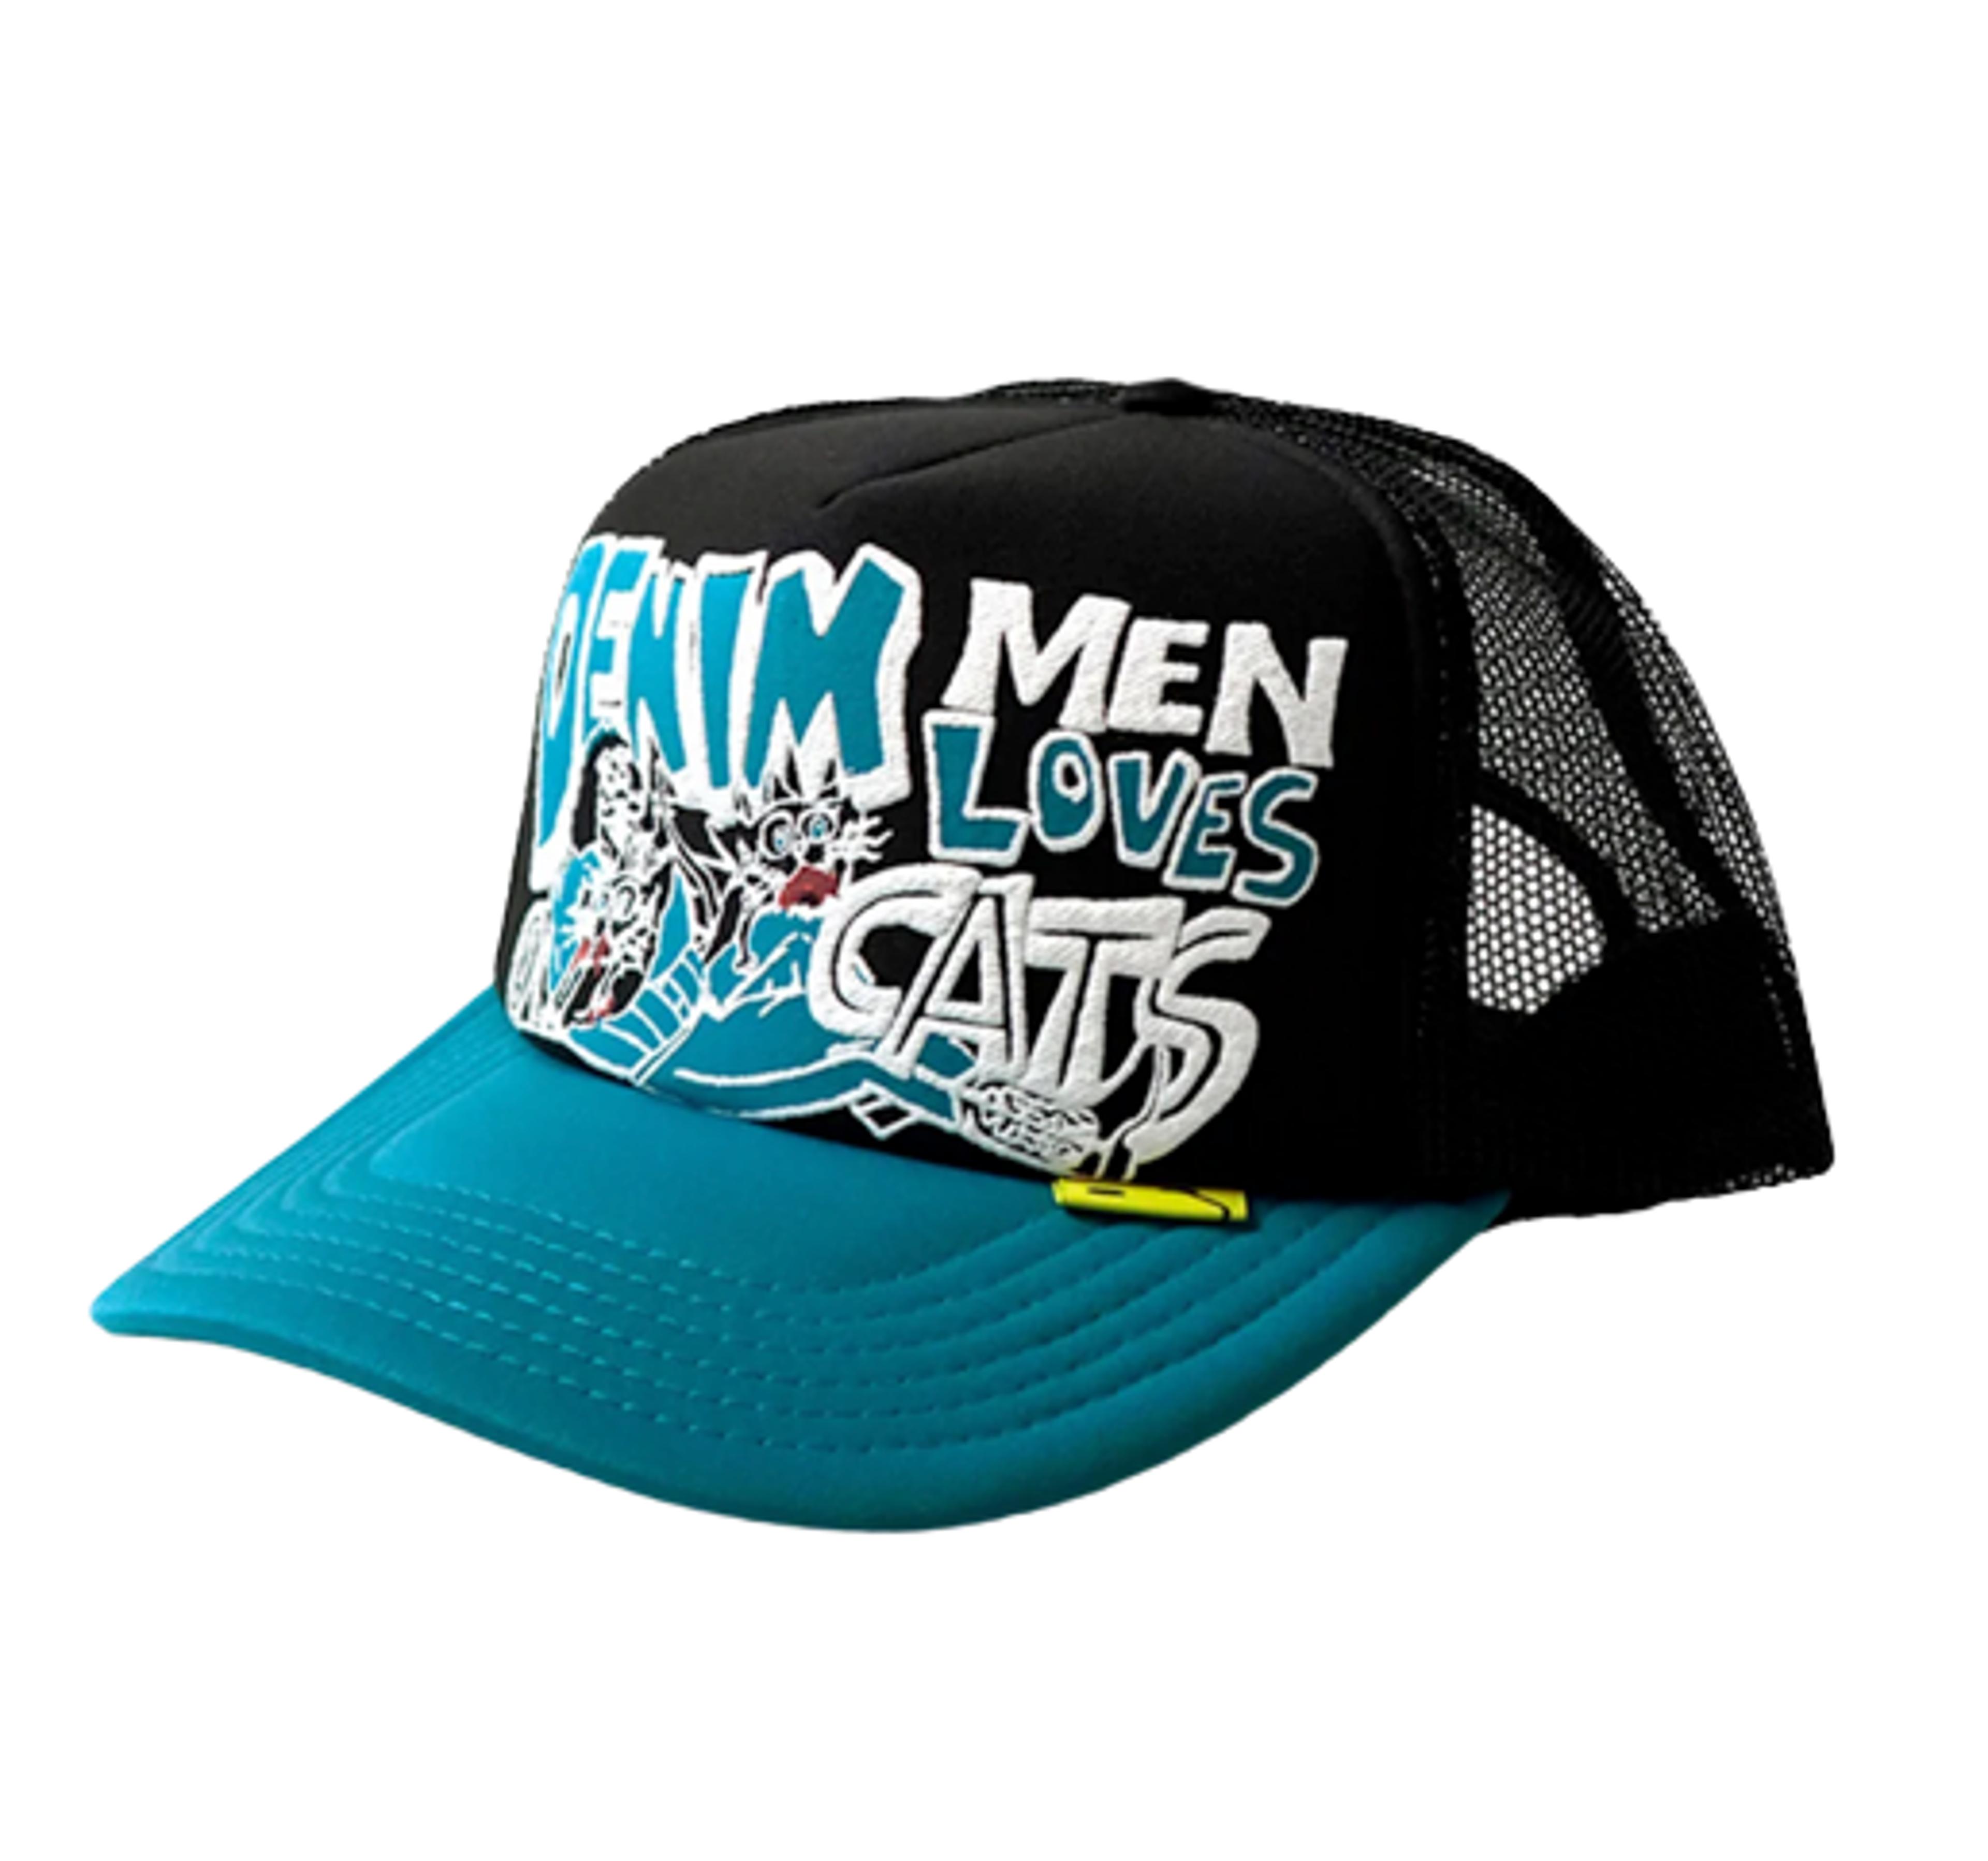 Kapital Denim Men Love Cats Camo Trucker Hat Black Blue